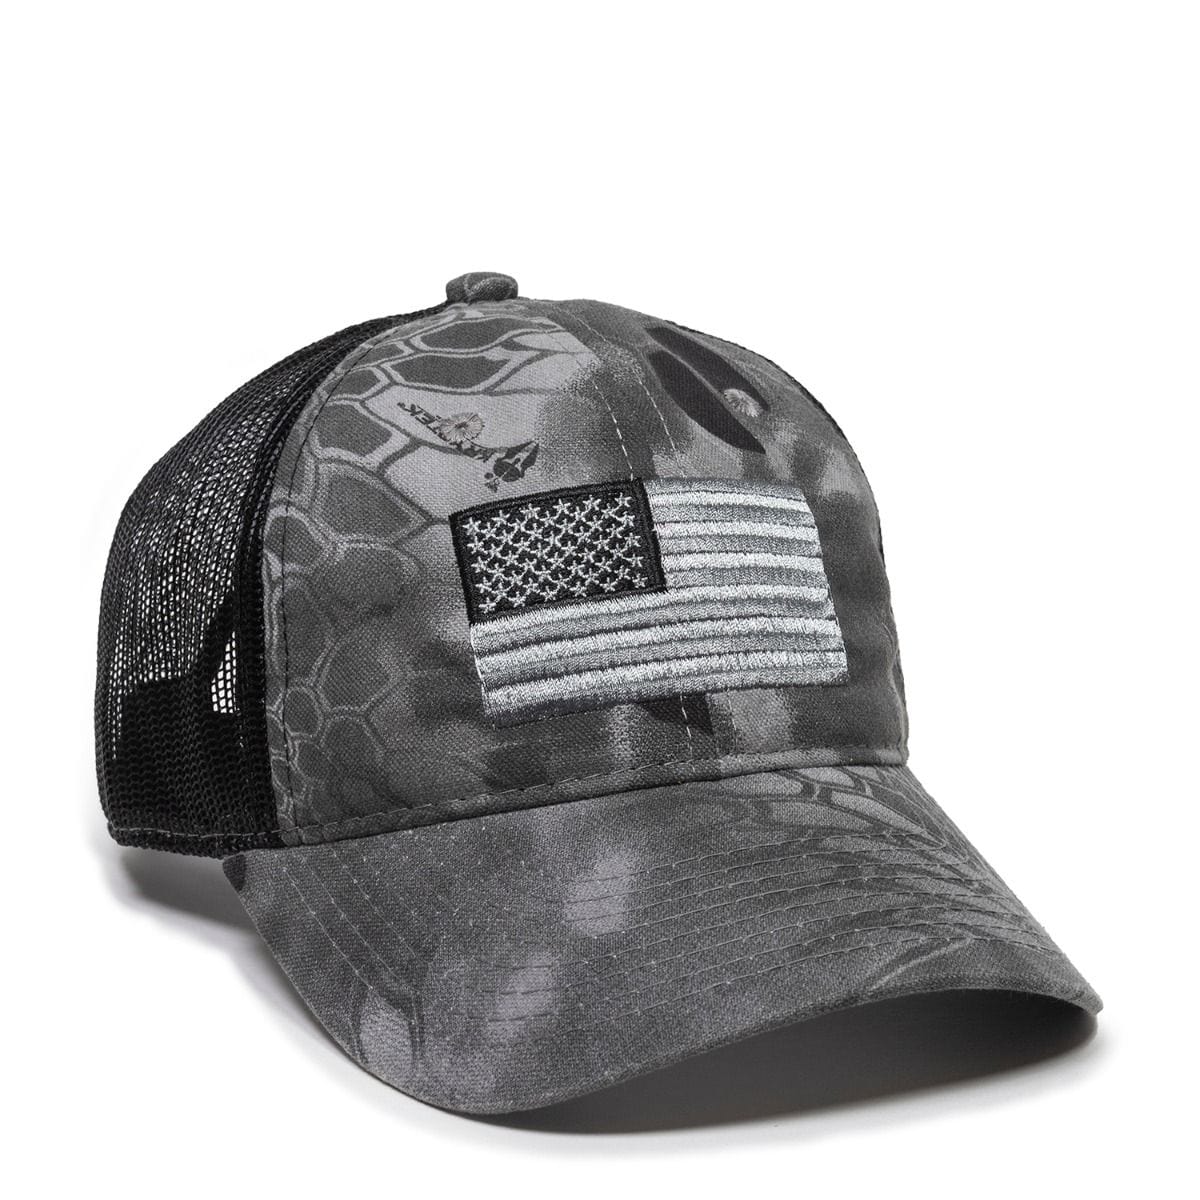 Accessories & Gear Kryptek Black Raid US Flag Unstructured Fishing Hat